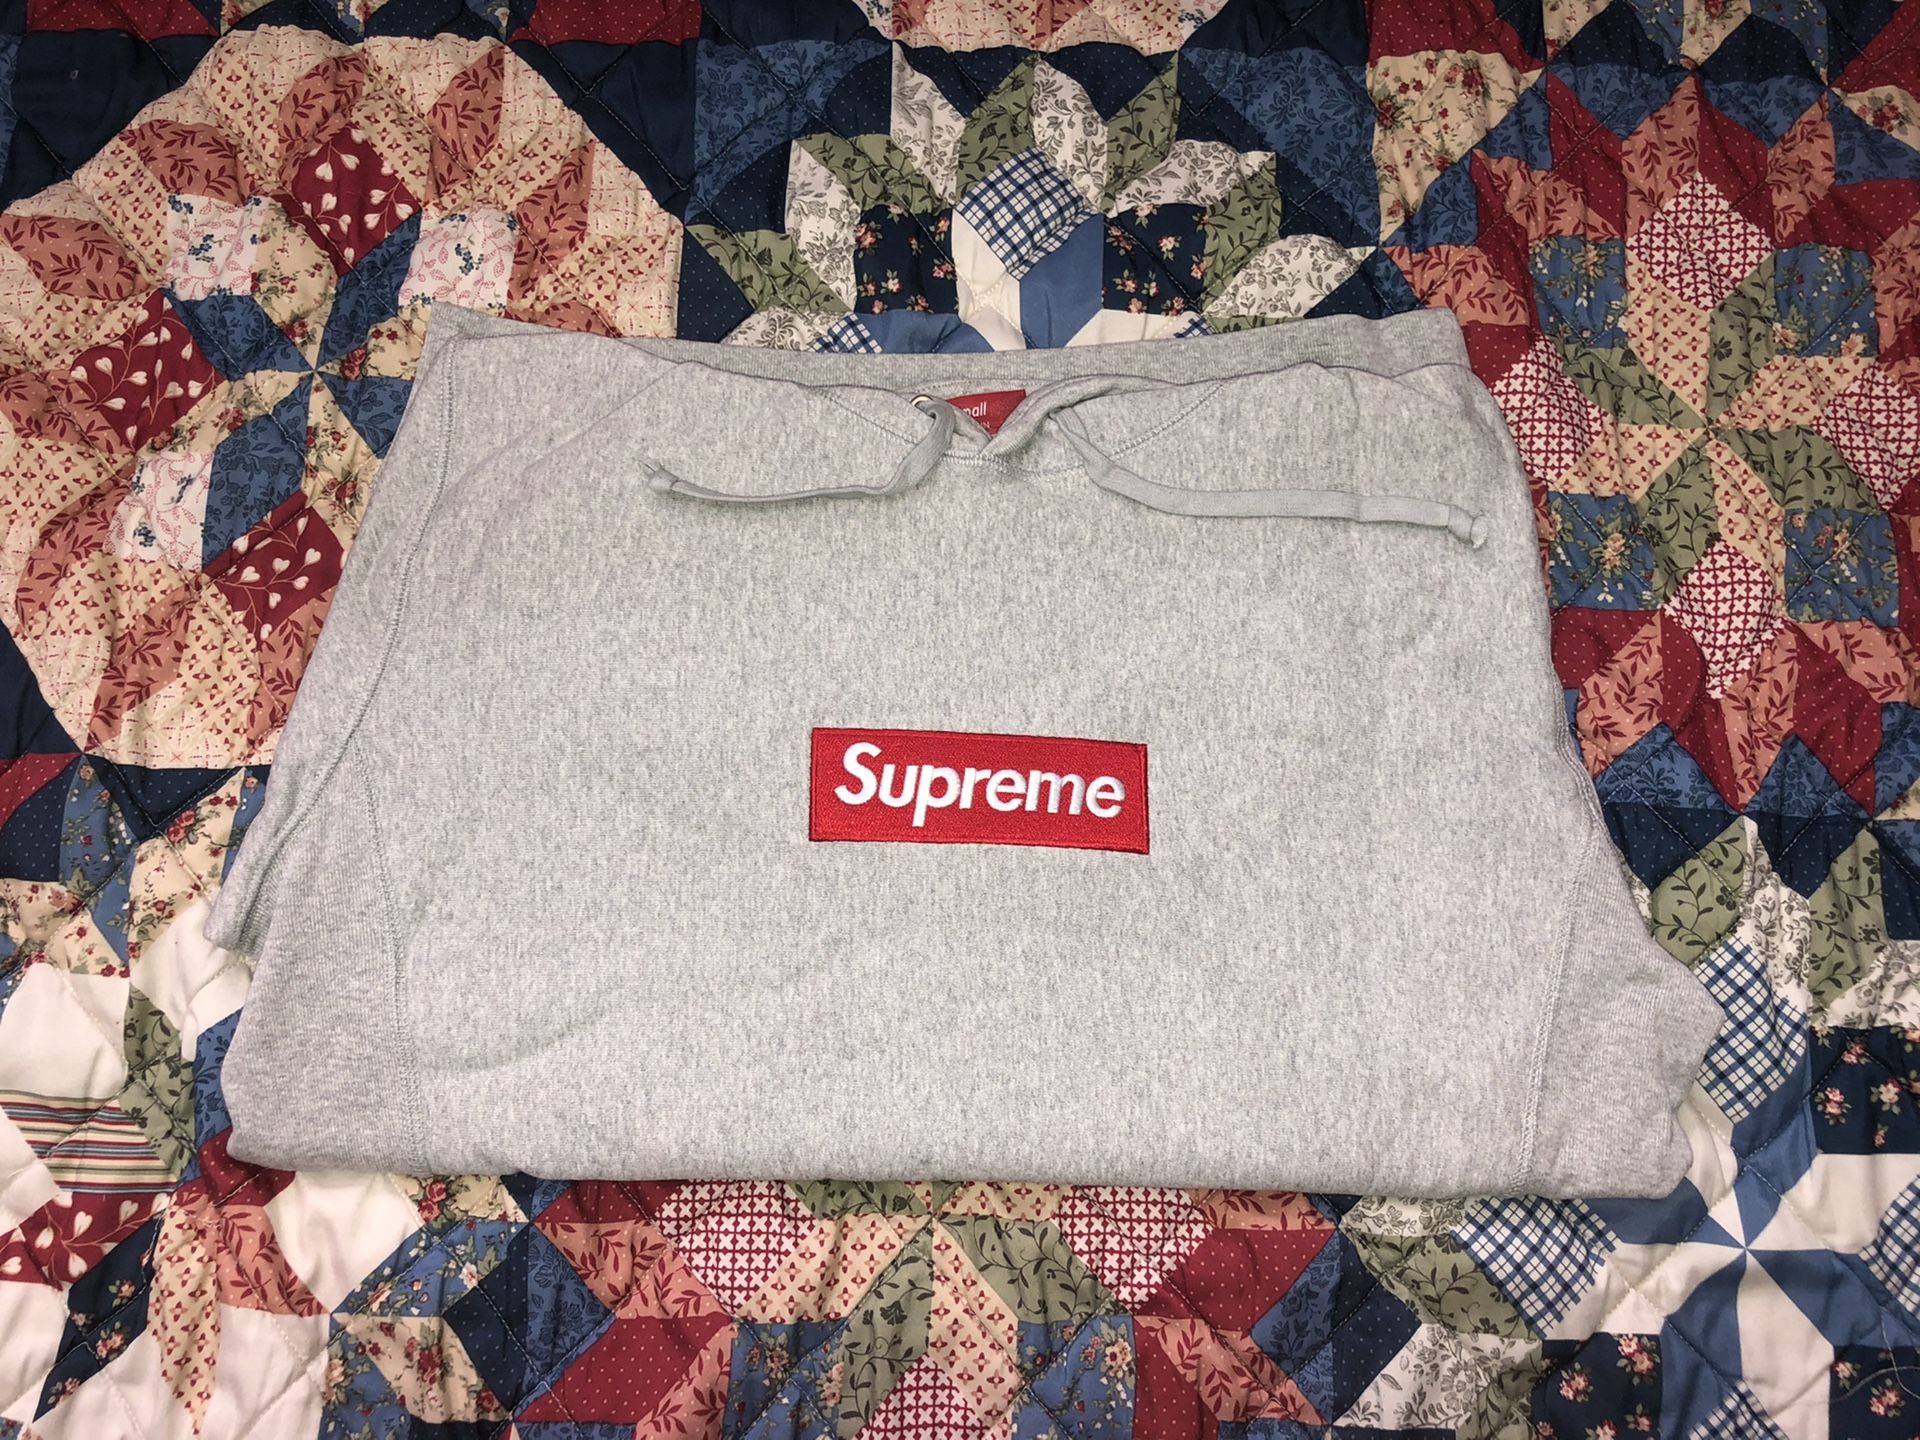 Supreme box logo hoodie